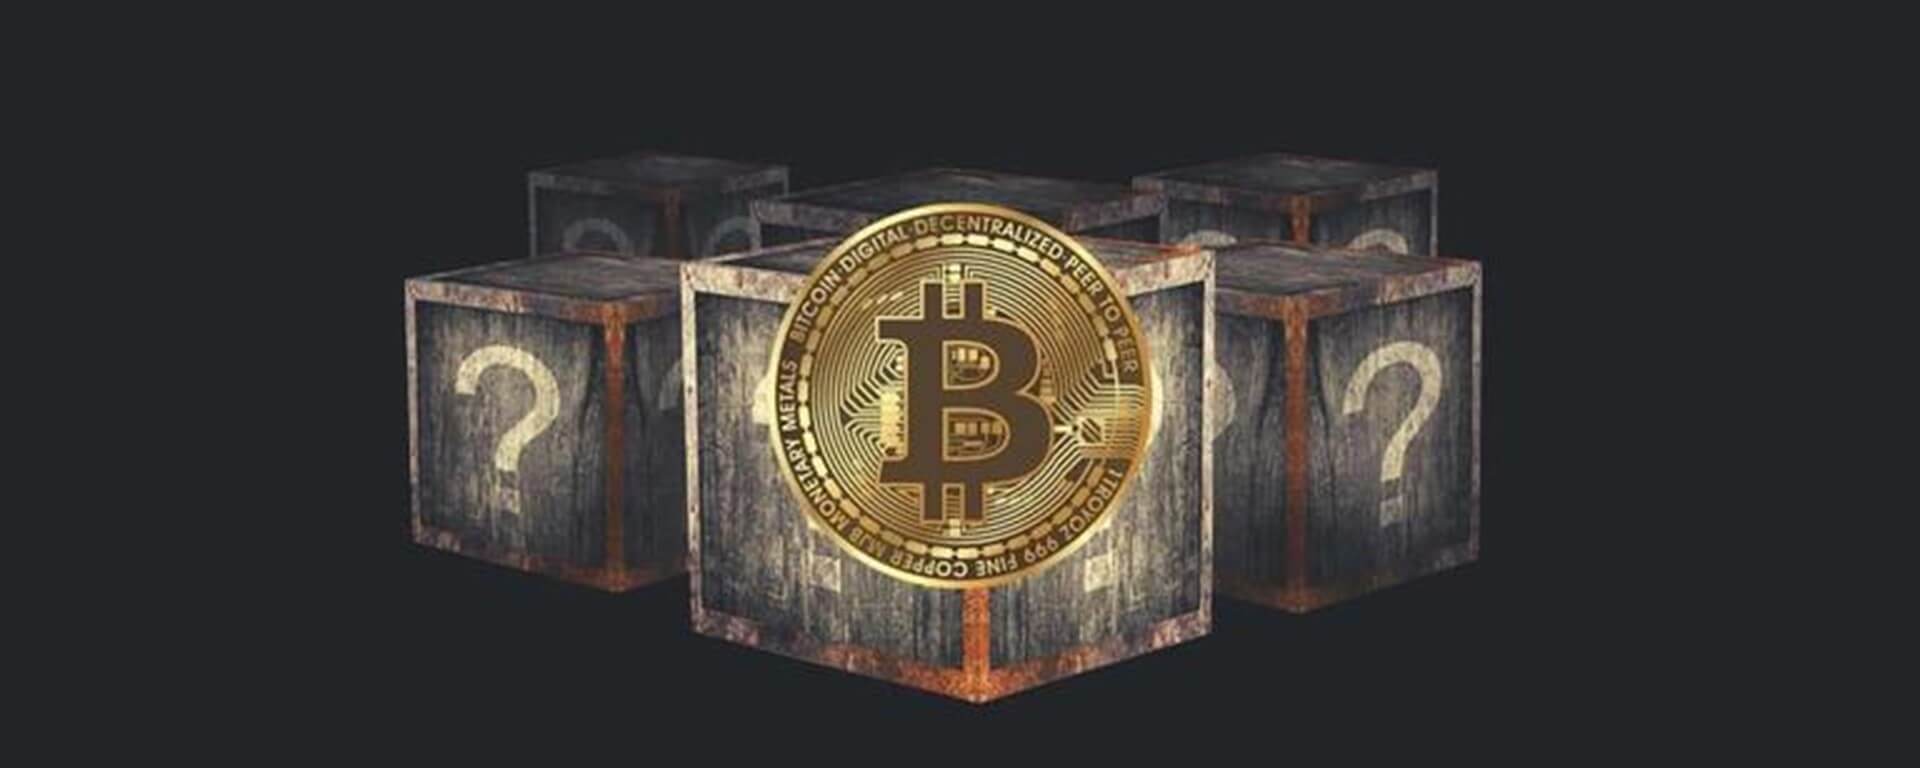 50 bitcoin value